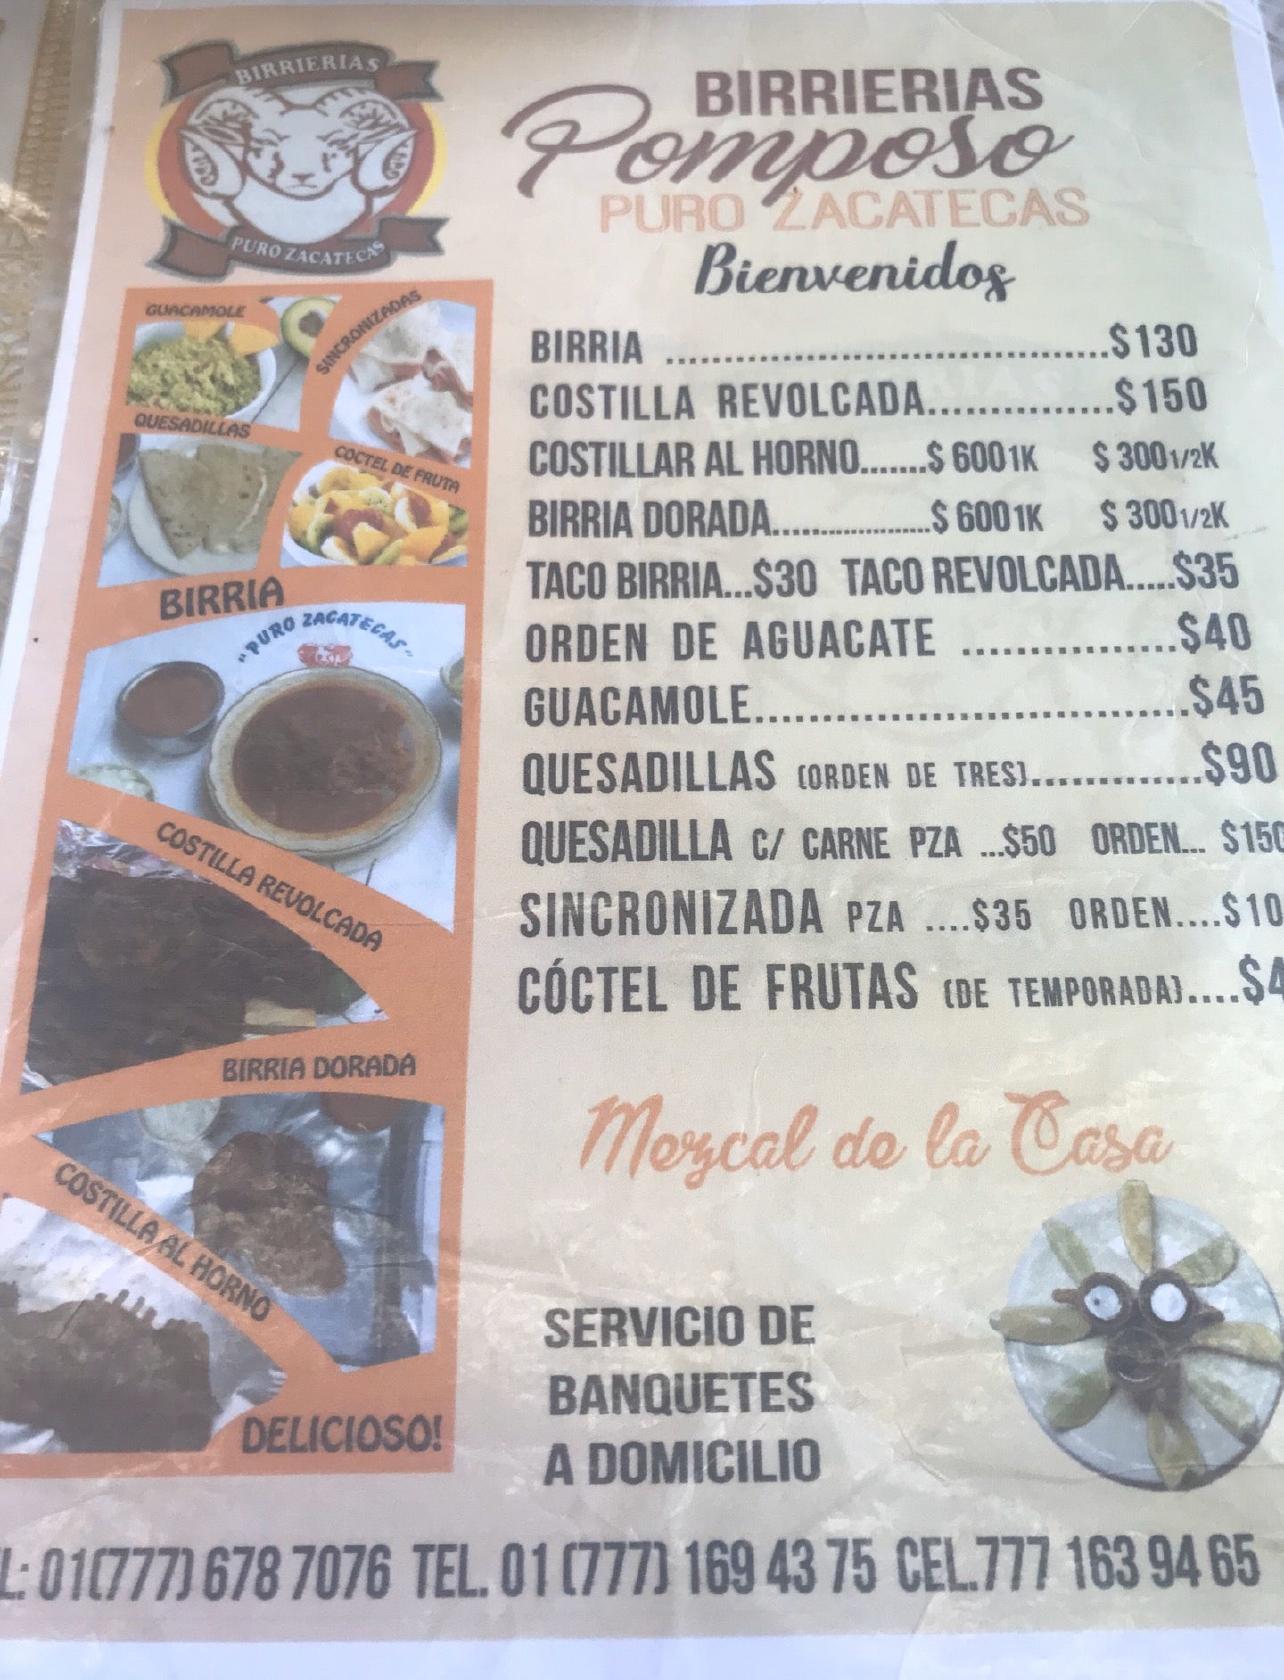 Menu at Birrierias Pomposo Puro Zacatecas restaurant, Alpuyeca, Xochitepec  Mor.